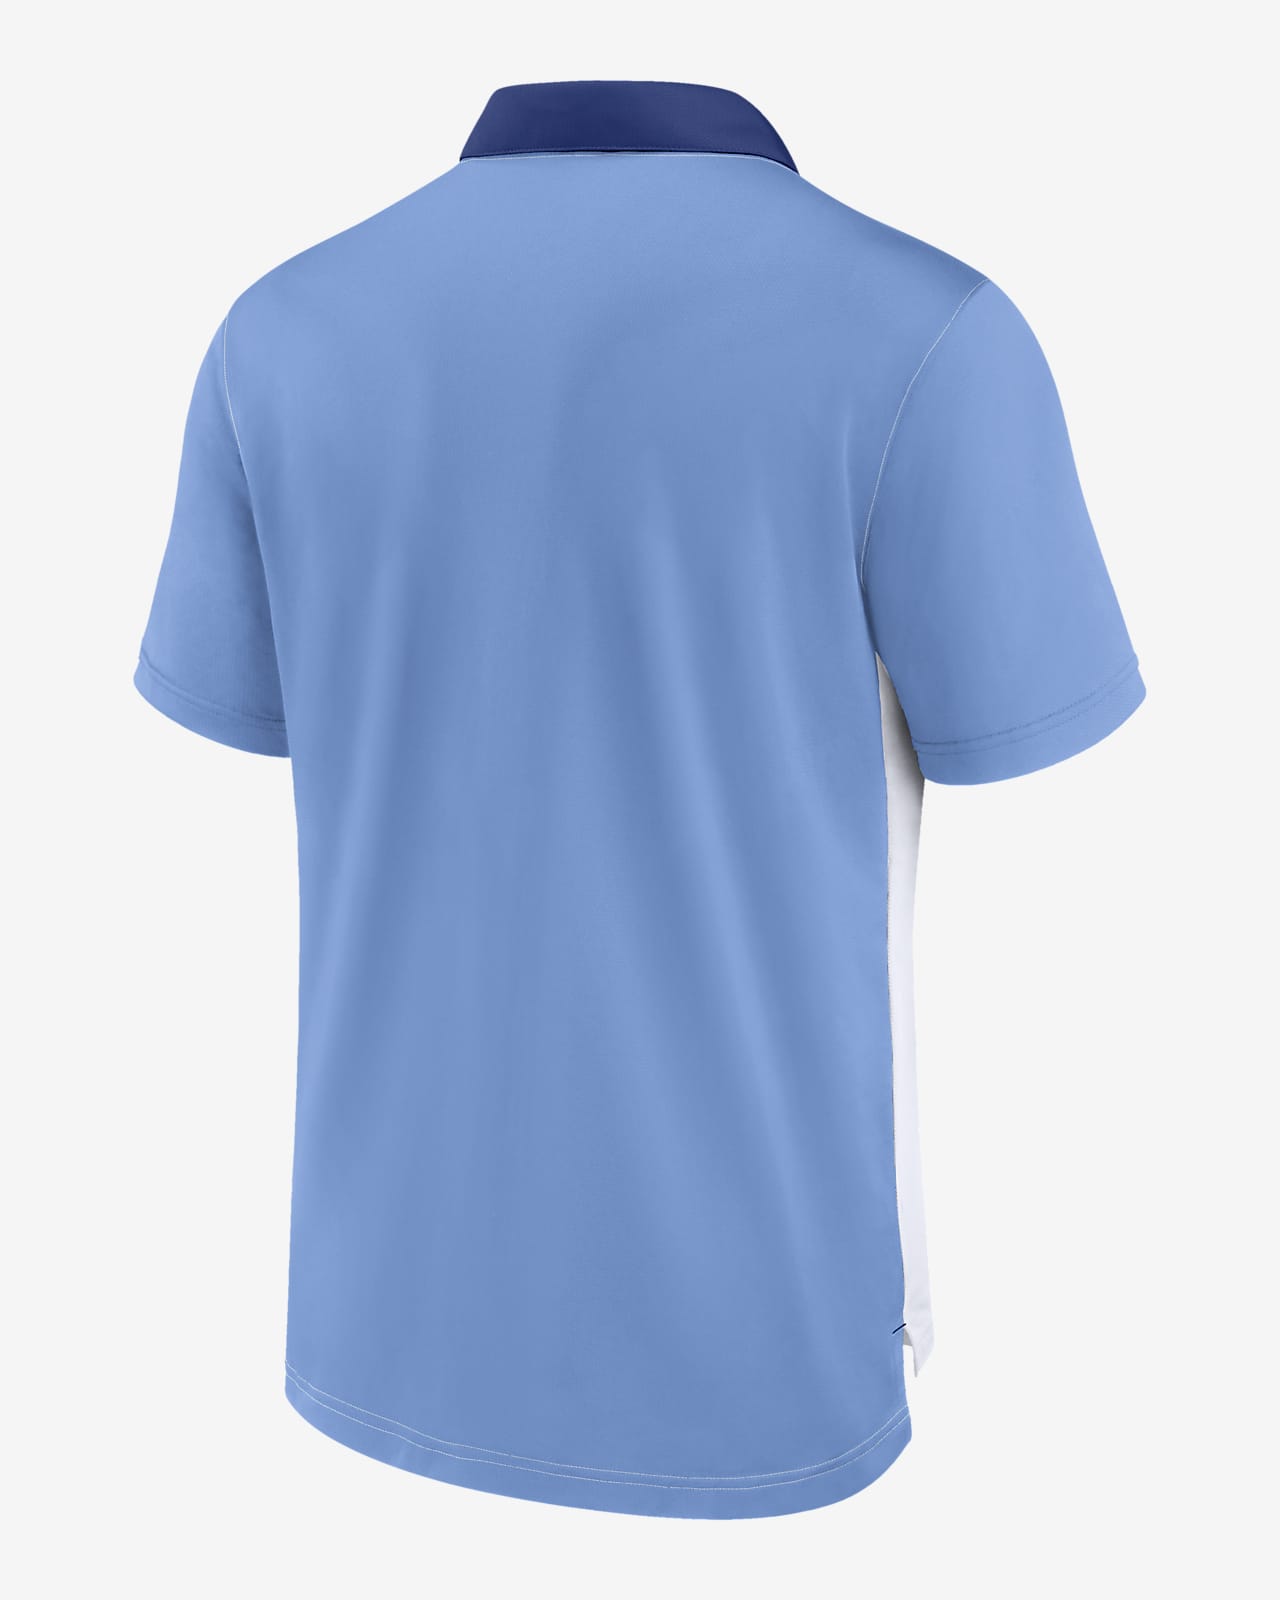 Nike Men's White, Light Blue Chicago Cubs Rewind Stripe Polo Shirt